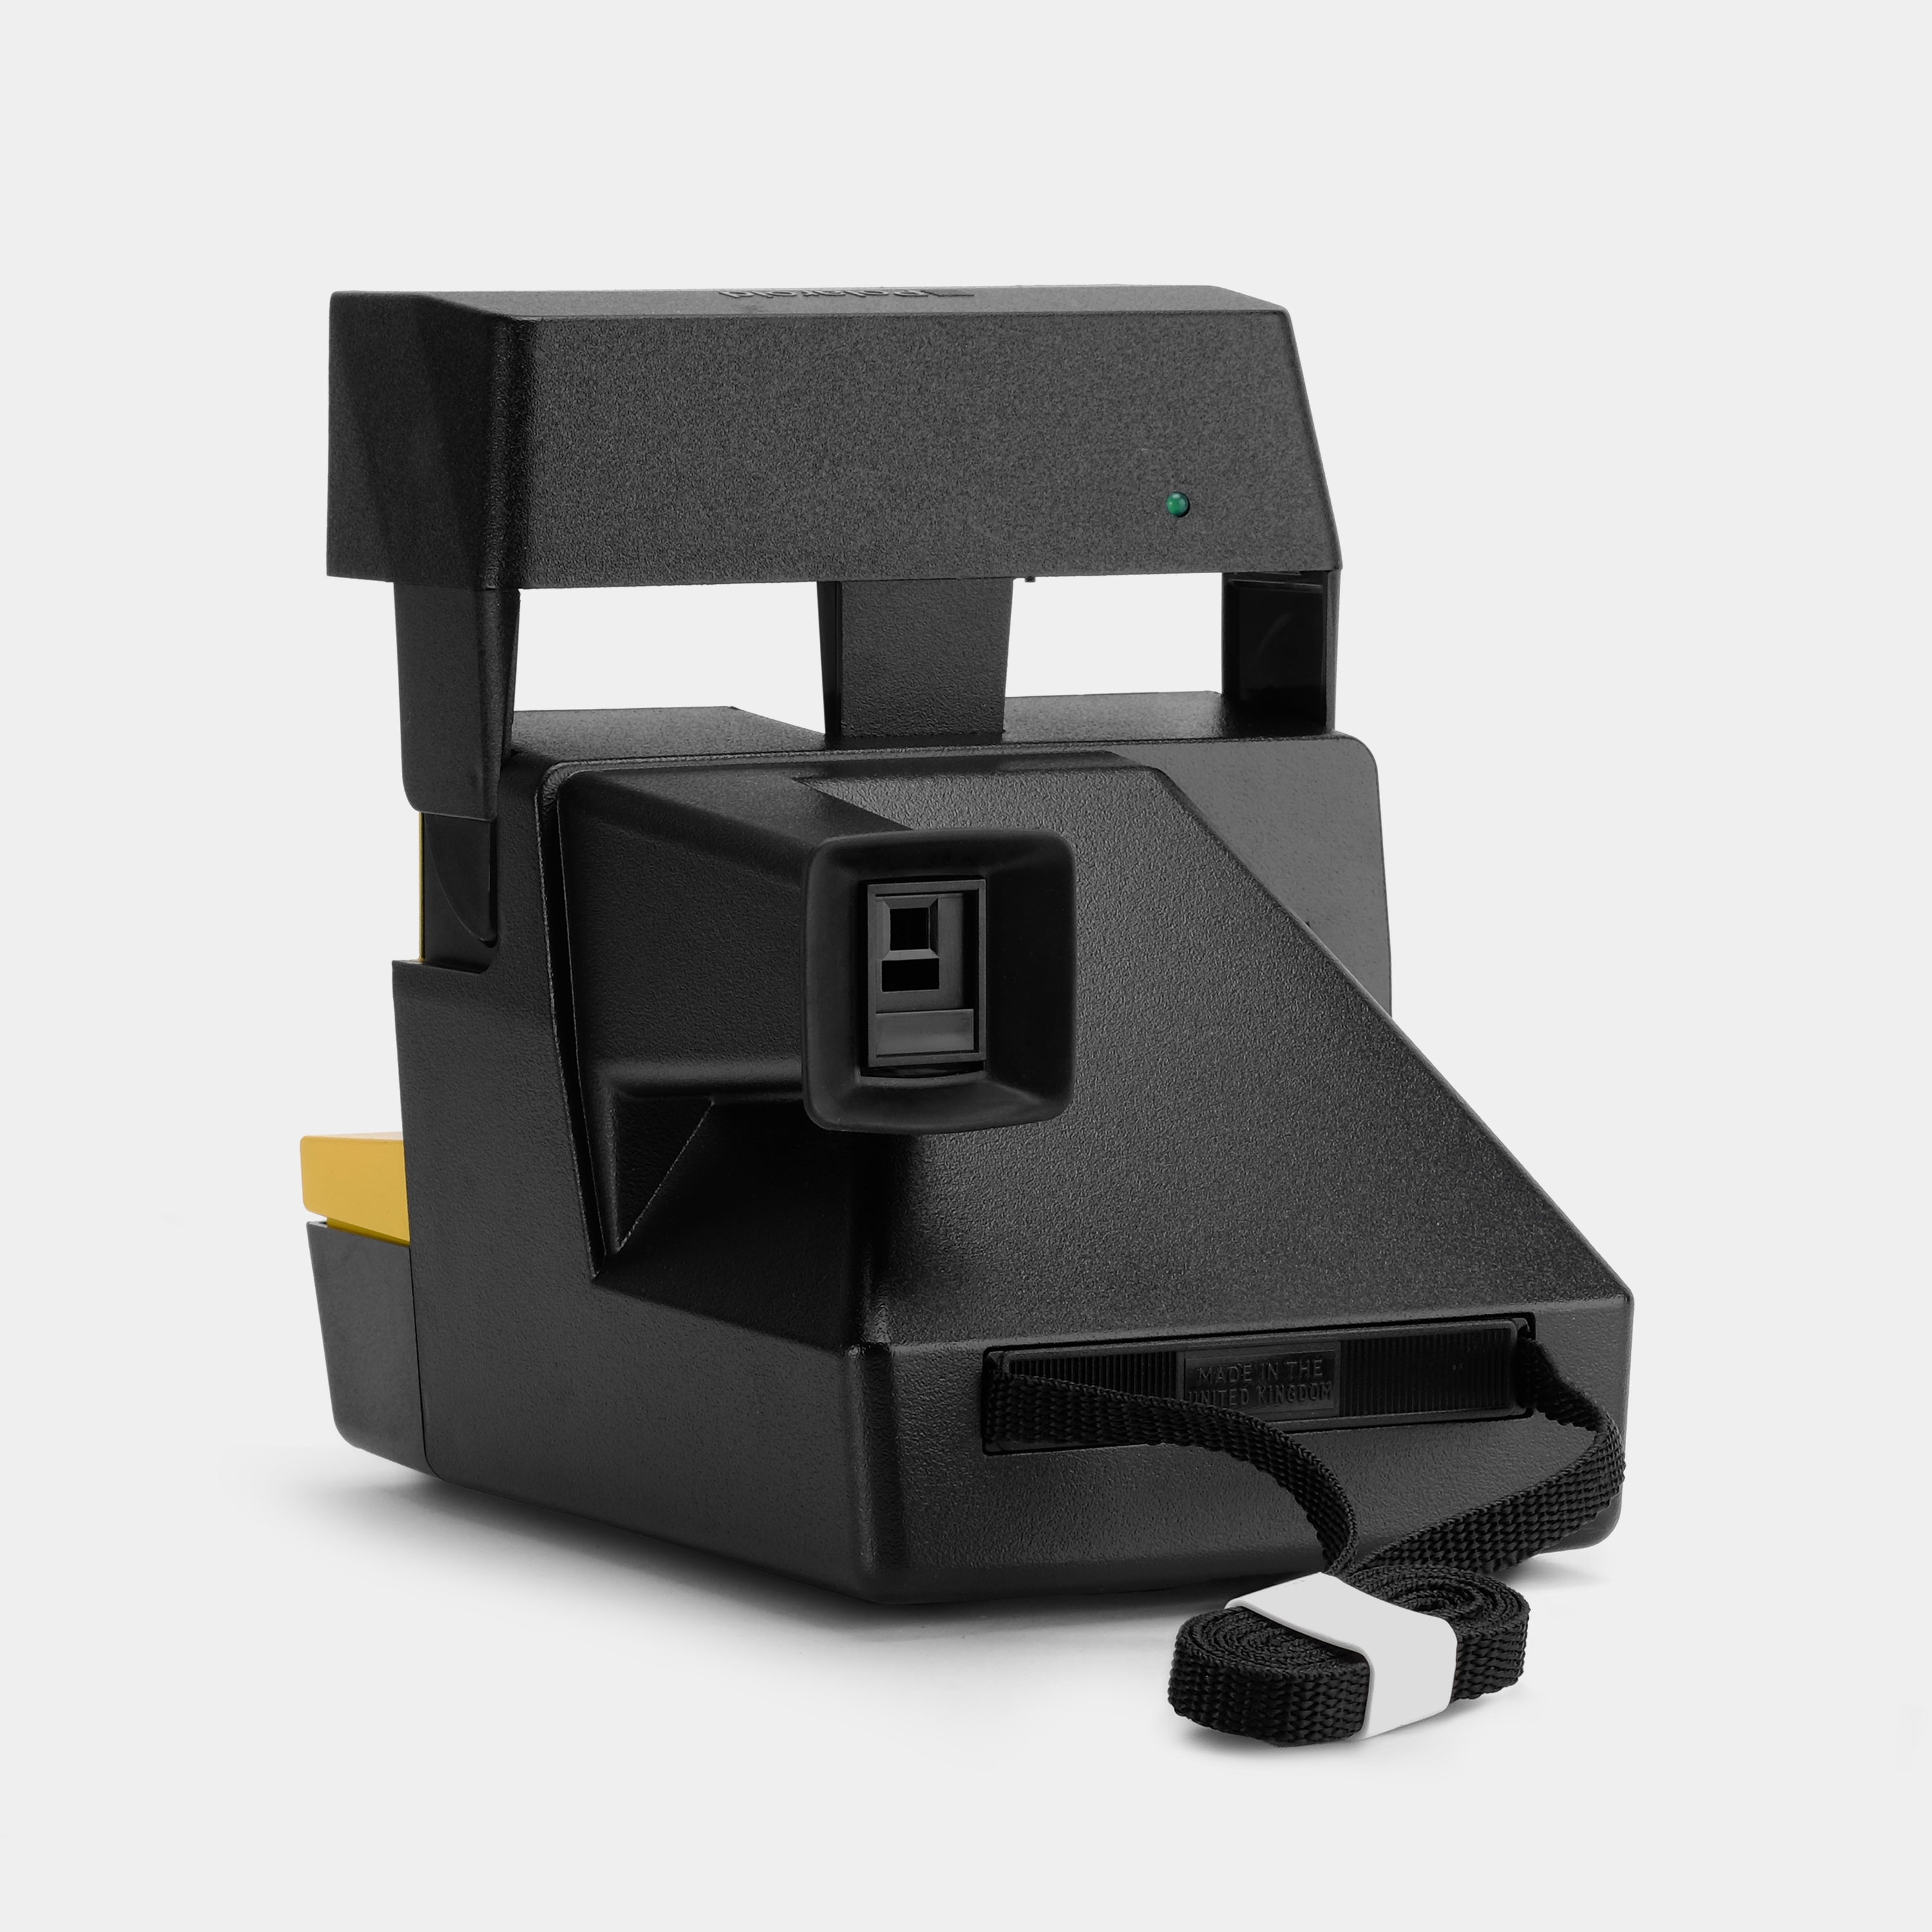 Polaroid 600 Job Pro Instant Film Camera